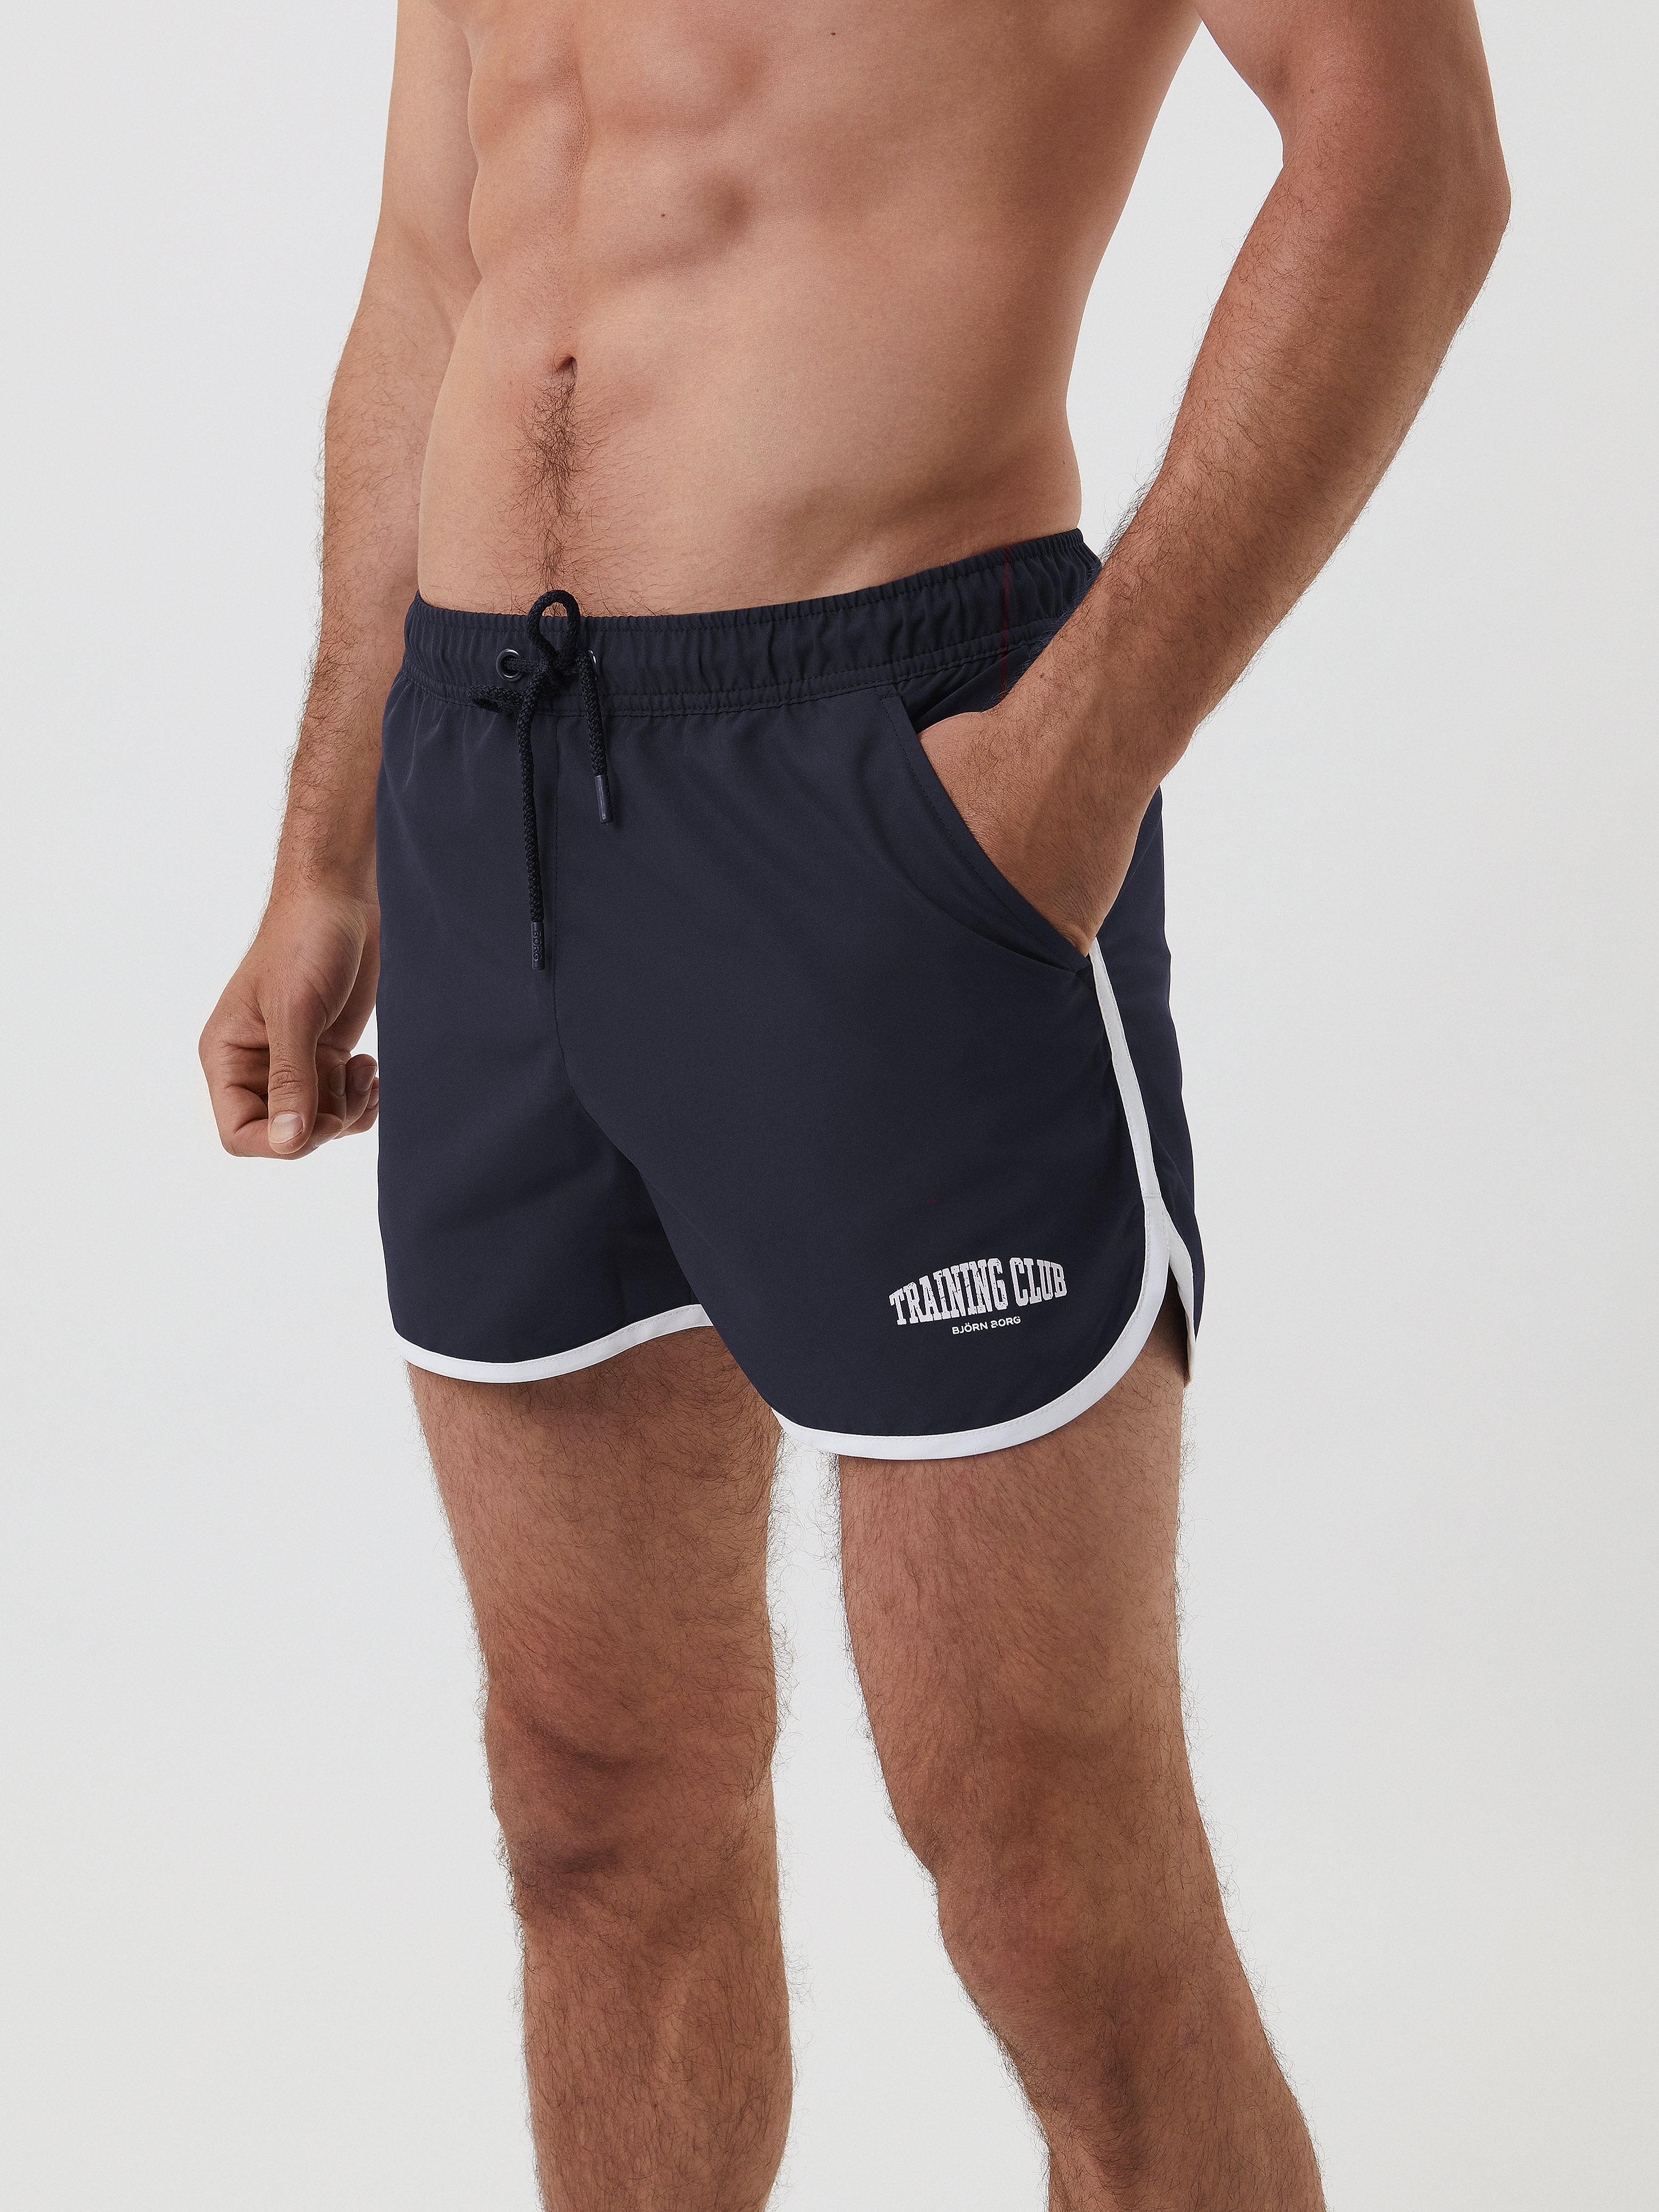 Coco BLVD Men's Beach Swimming Trunks Boxer Brief Swimsuit Swim Underwear Boardshorts with Pocket 